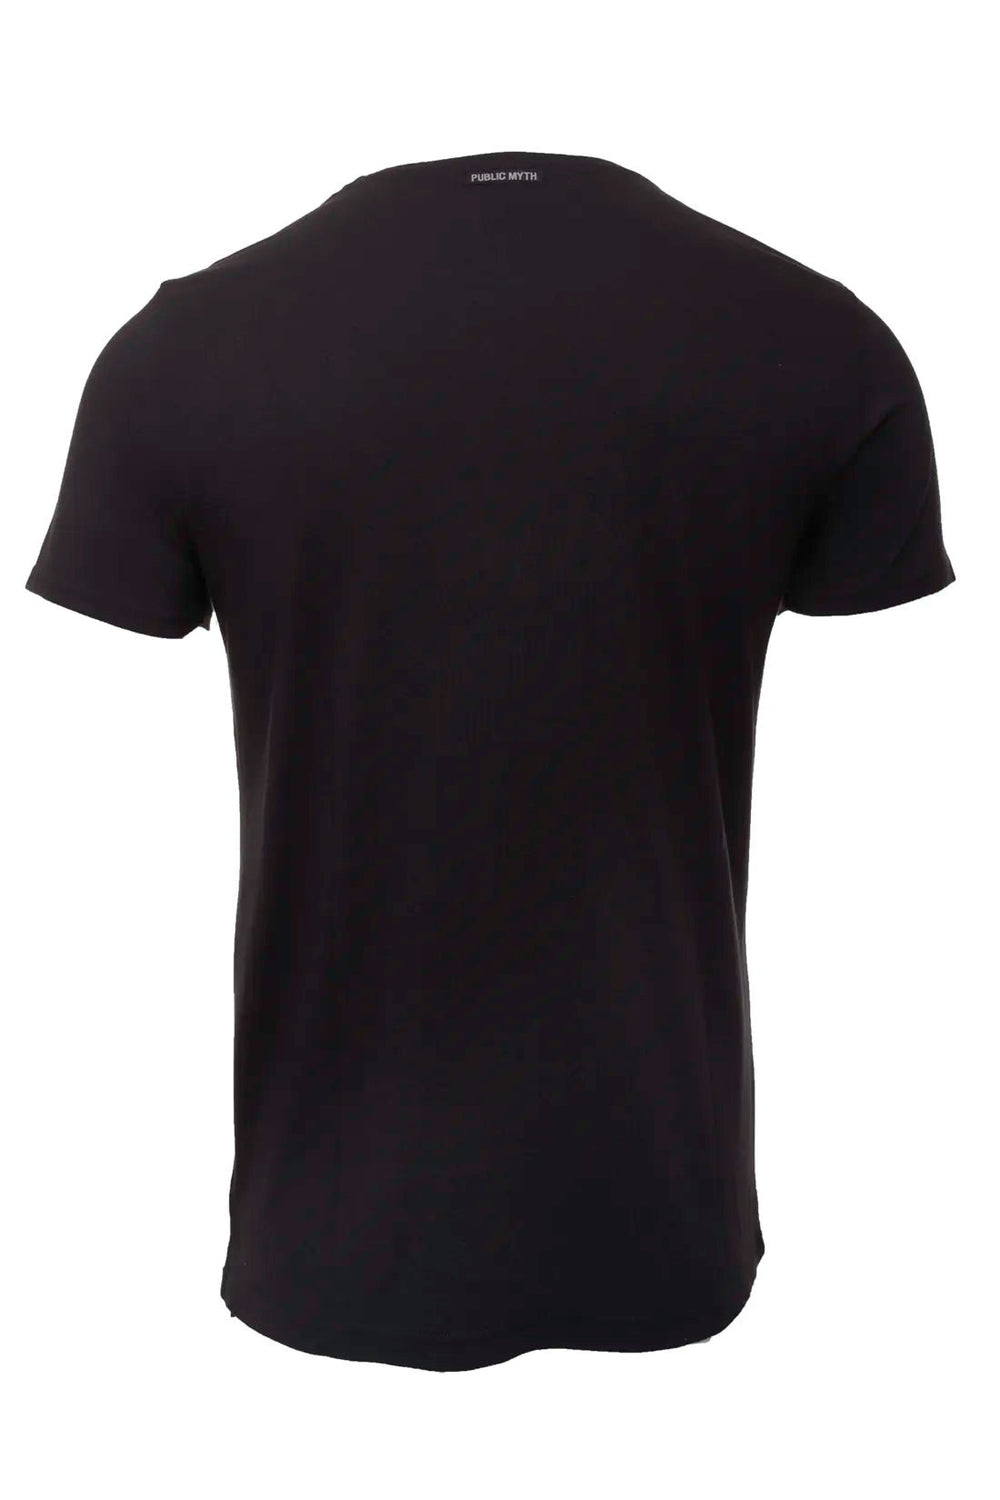 Men's bamboo T-shirt in black